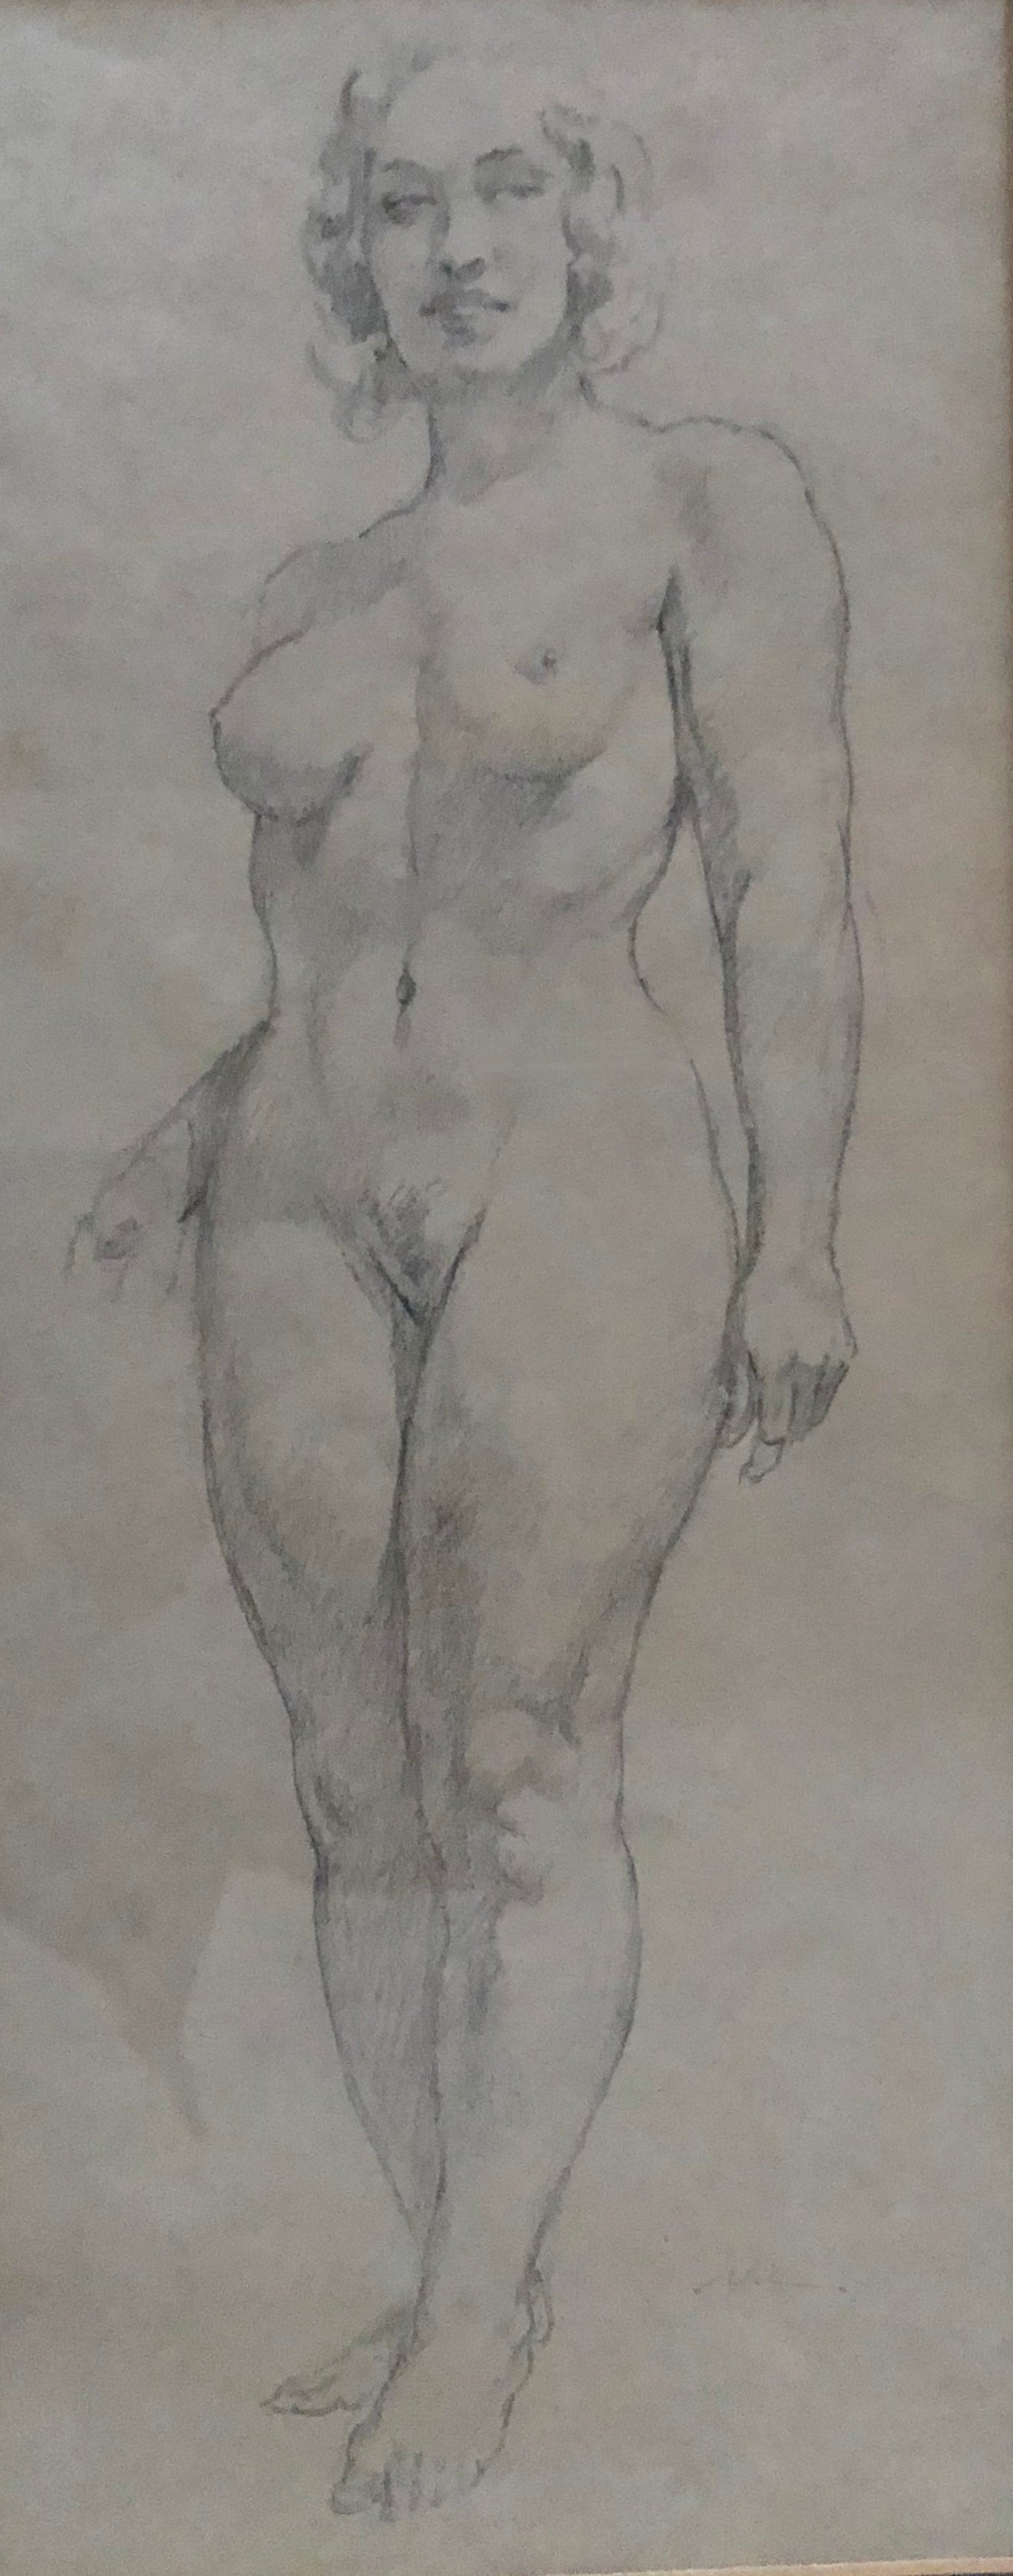 Nude Female Galleries